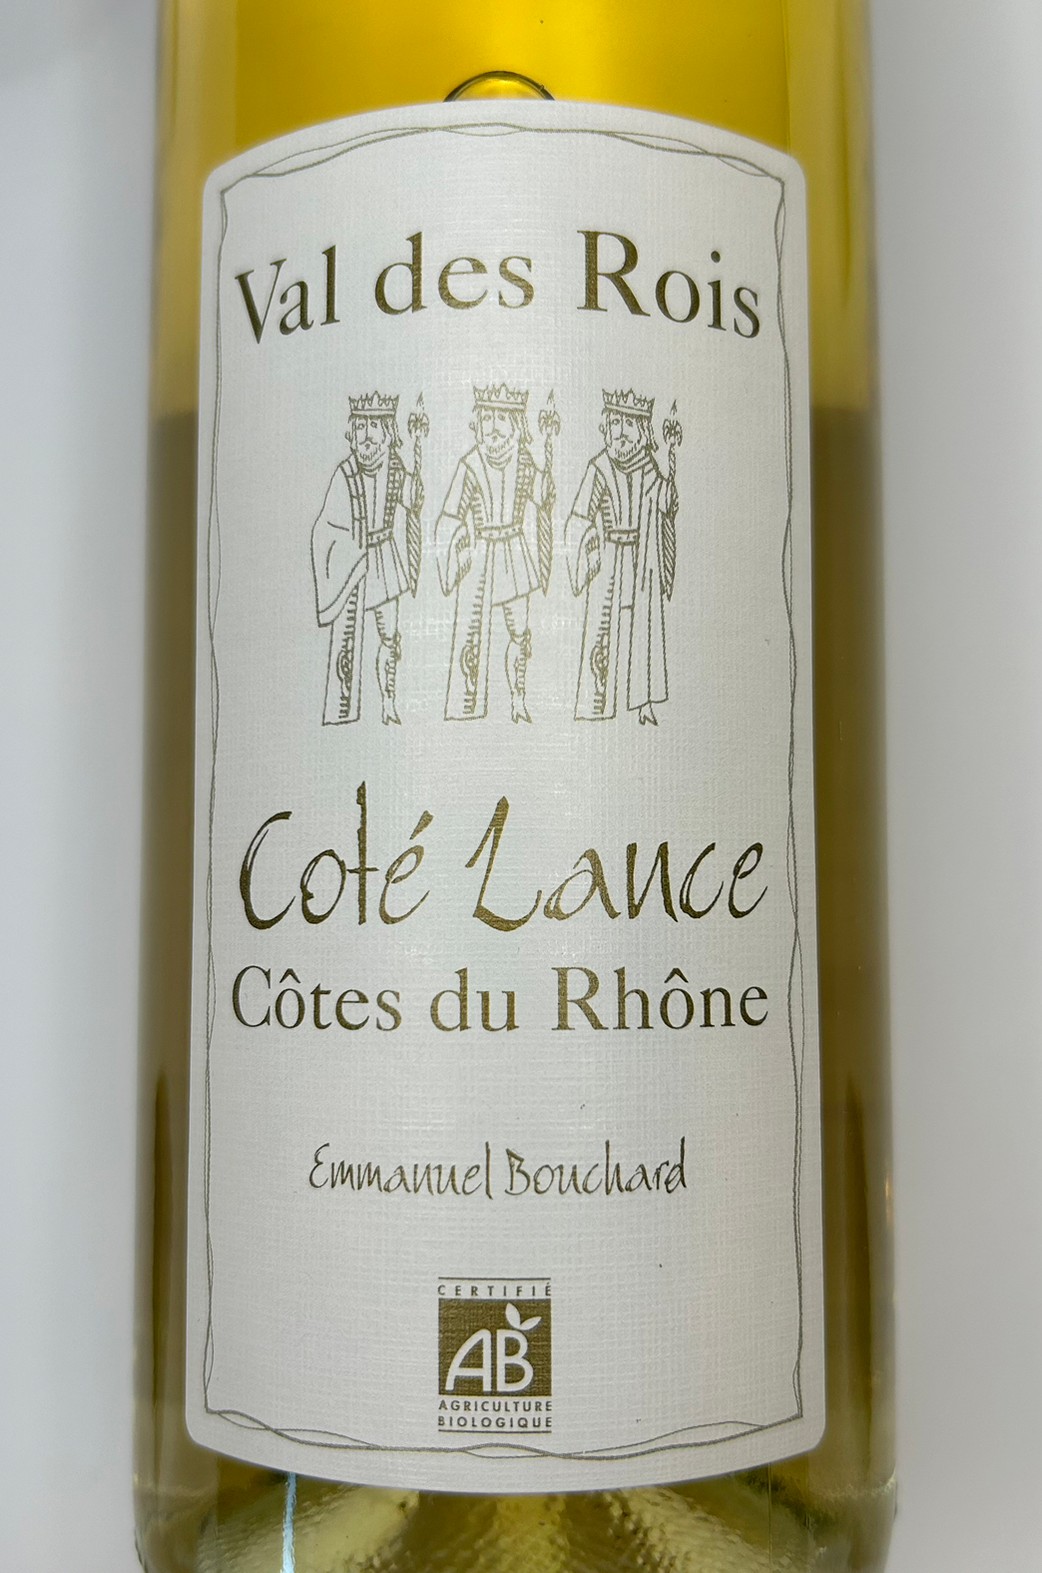 Côtes  du  Rhône  Blanc  ≪Coté  Lance  ≫ Au  pied  d'une  montagne　コート デュ ローヌ　コートランス オーピエ デューニュ モンターニュ